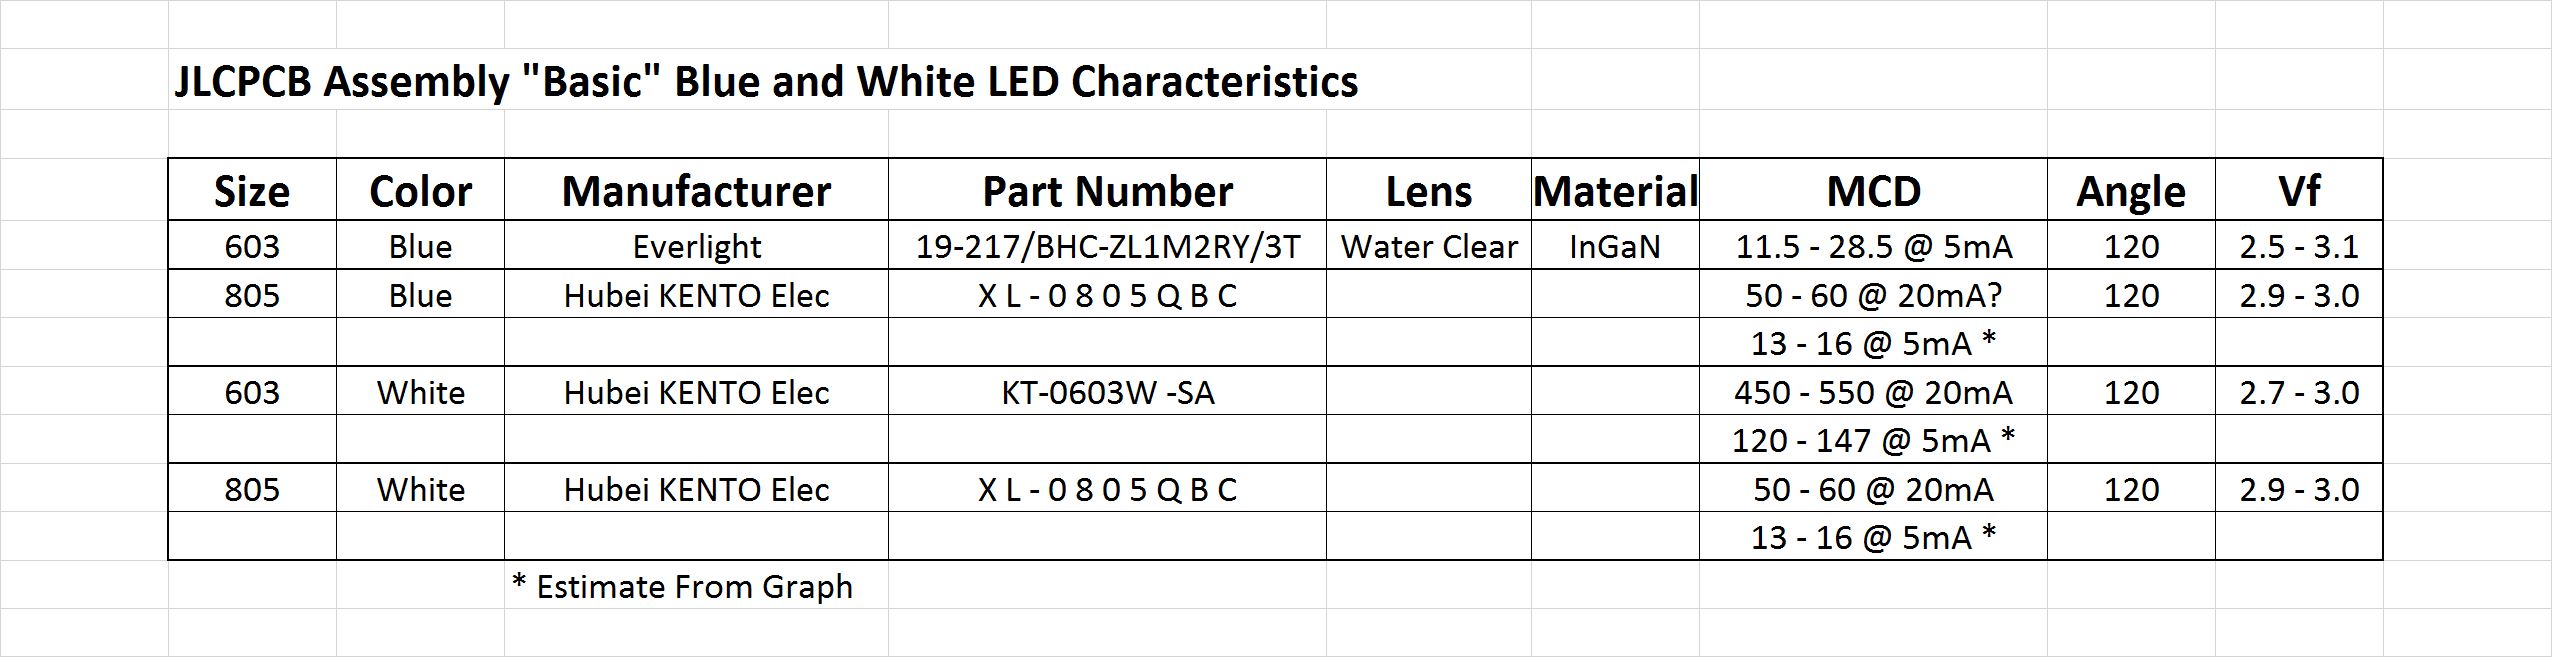 JLCPCB LED Characteristics.jpg